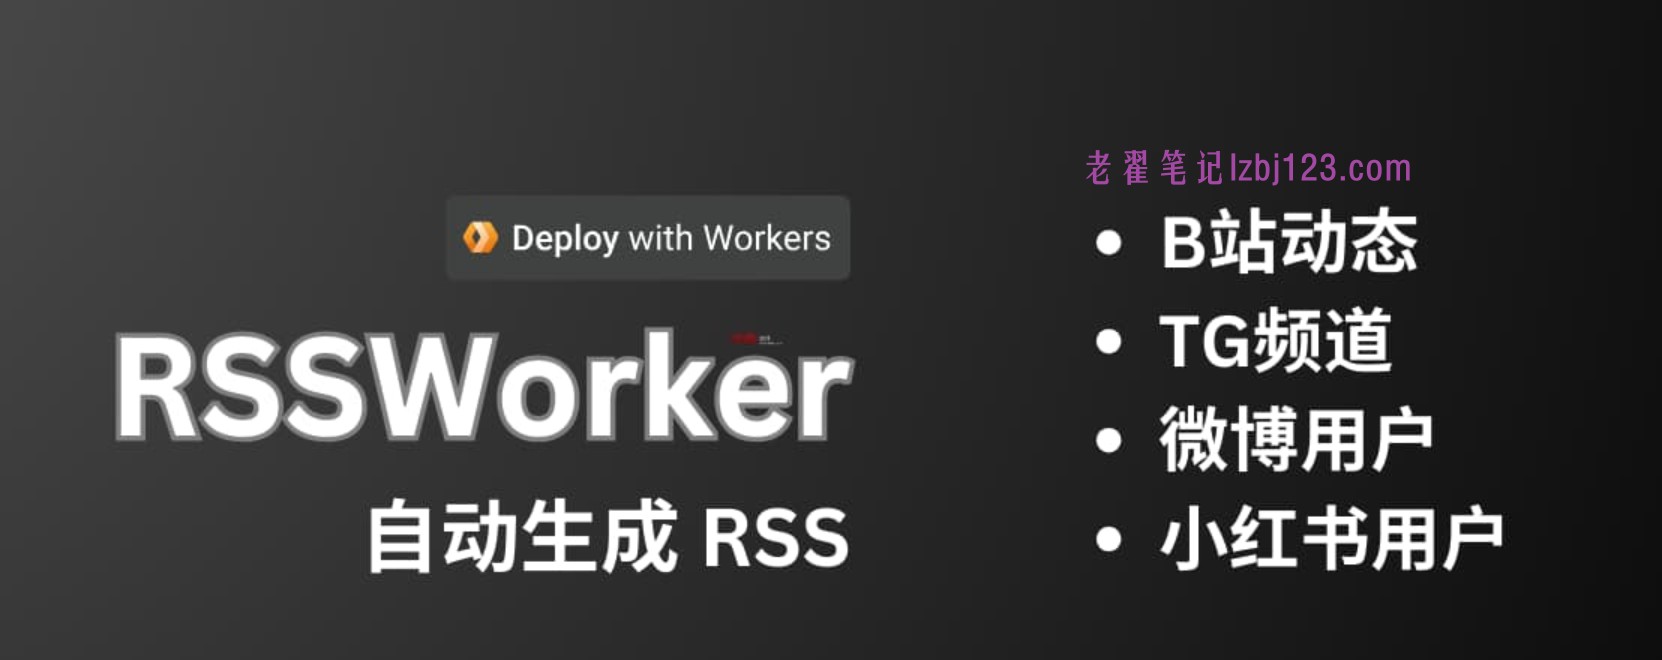 RSSWorker使用教程 – 可为B站、微博用户、TG、小红书用户生成 RSS订阅